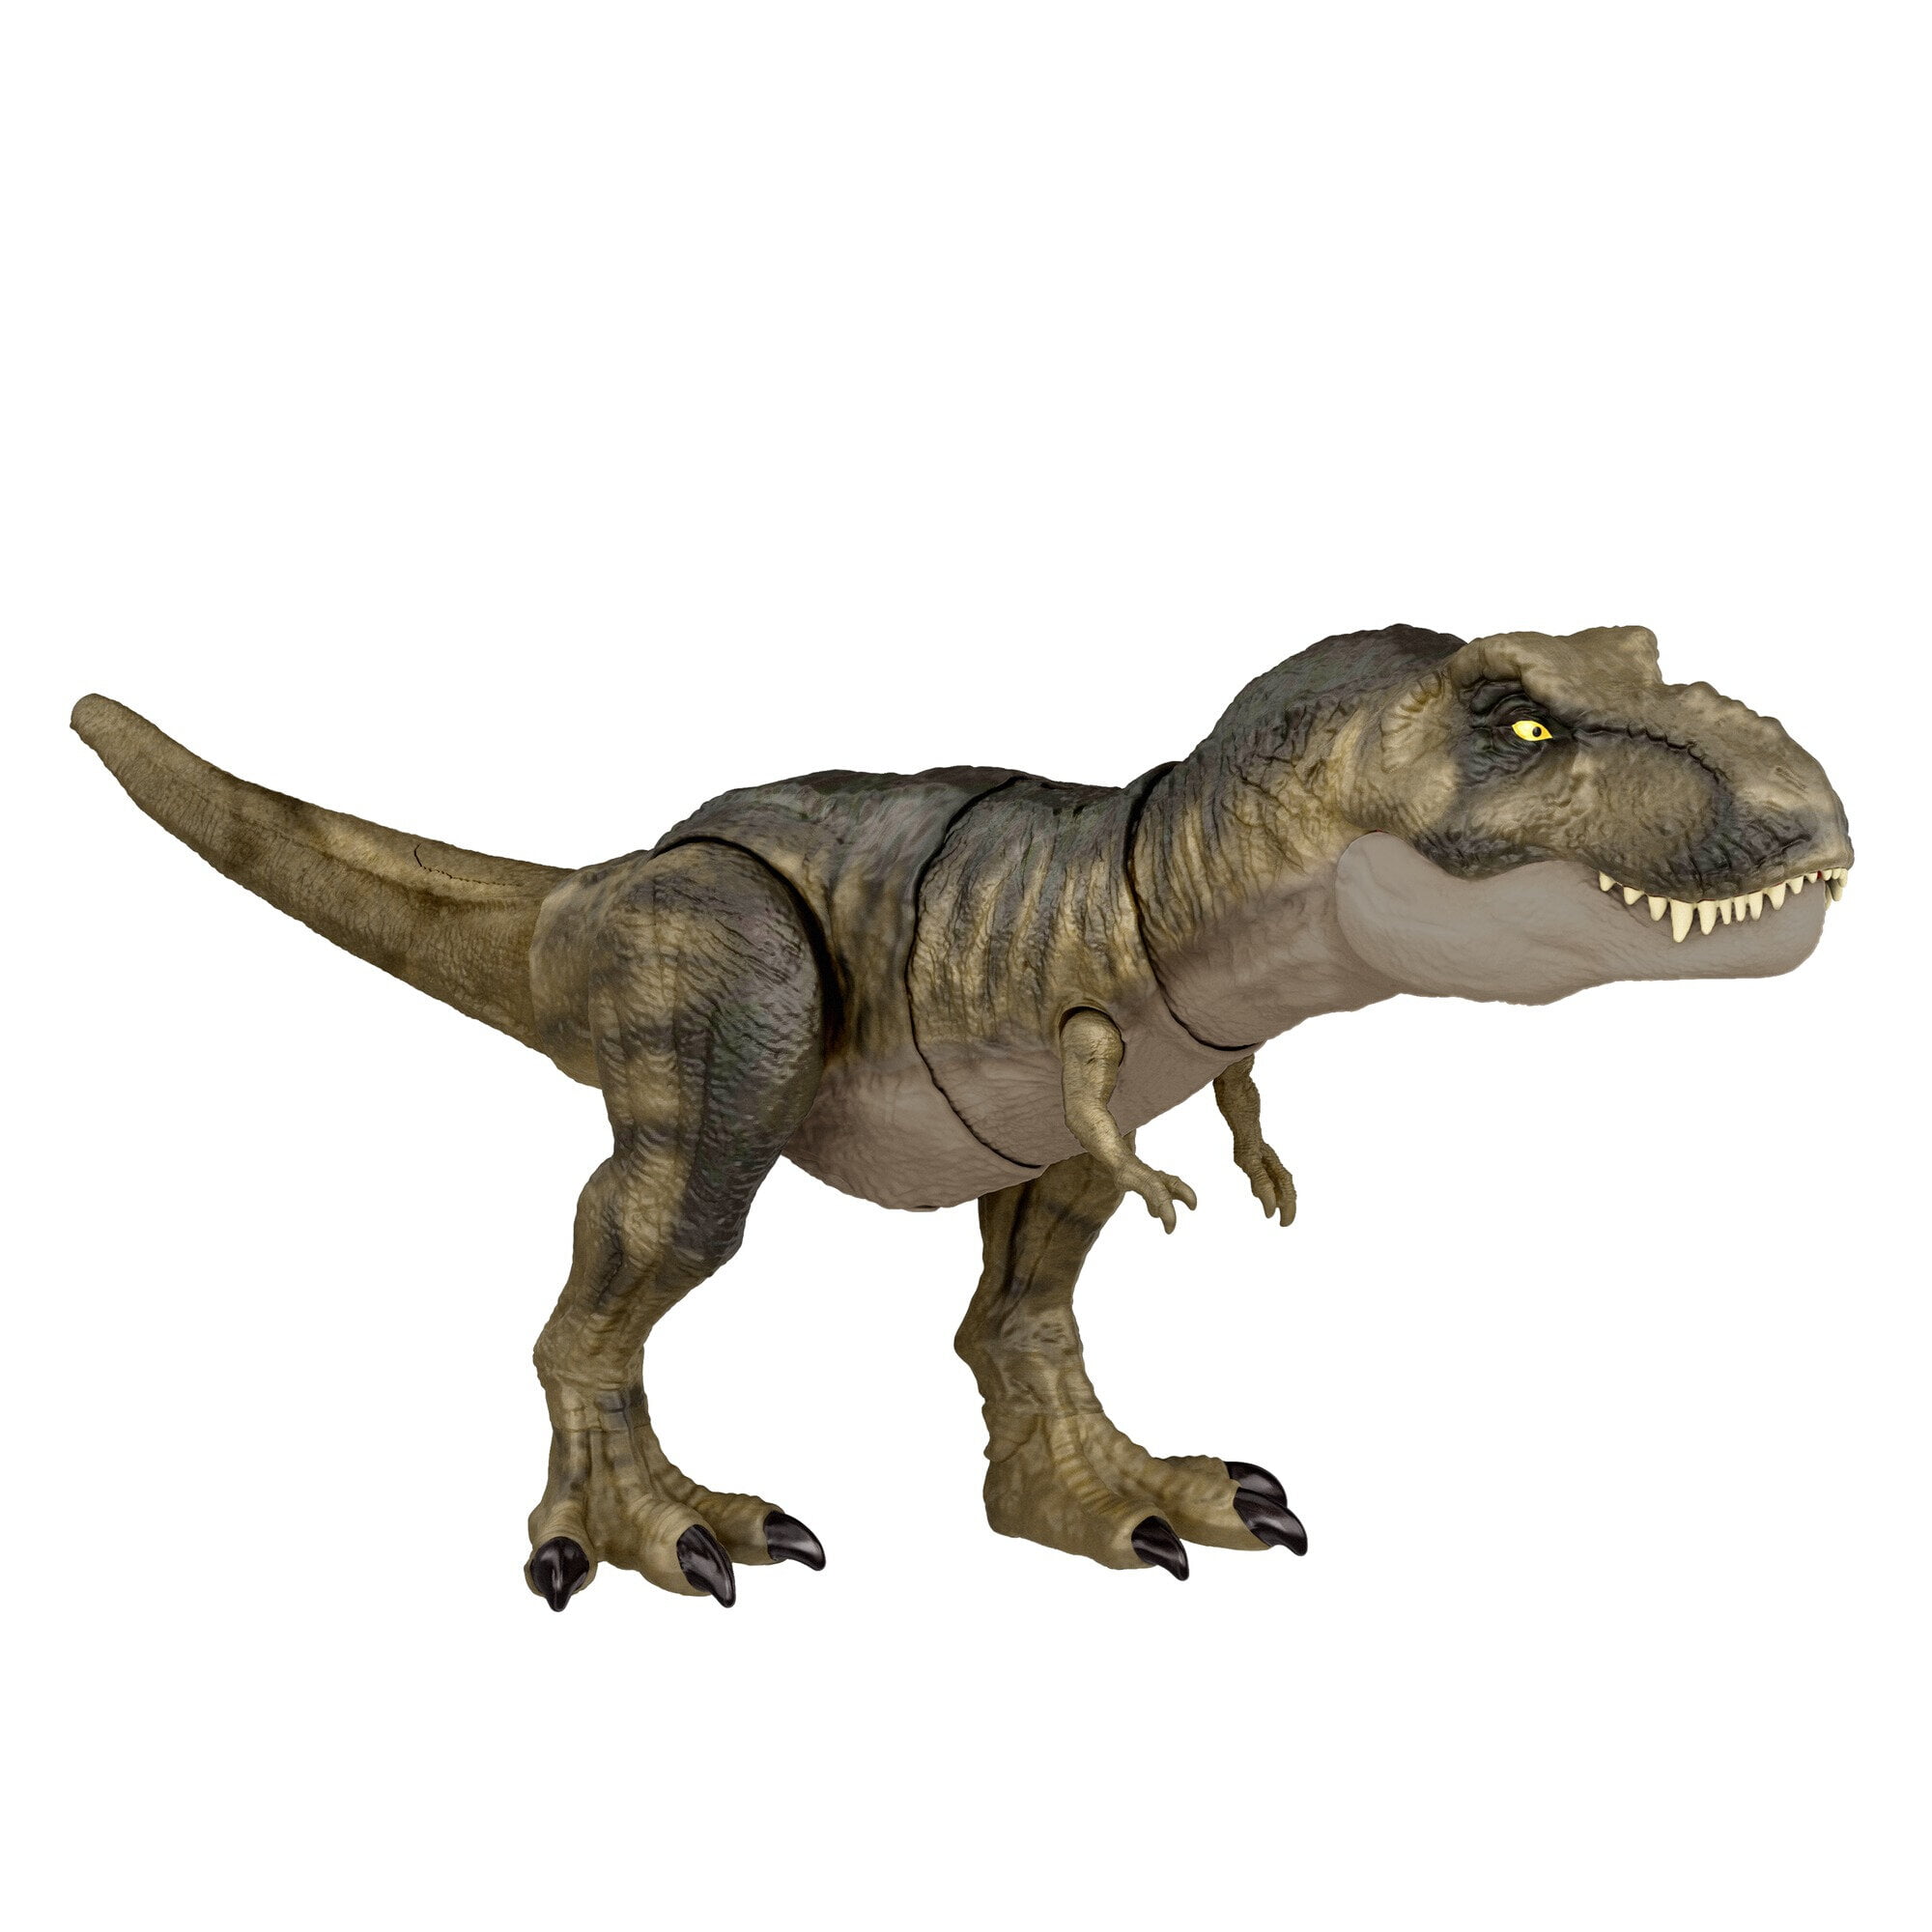 Jurassic World Dominion Thrash N Devour Tyrannosaurus Rex Dinosaur Toy